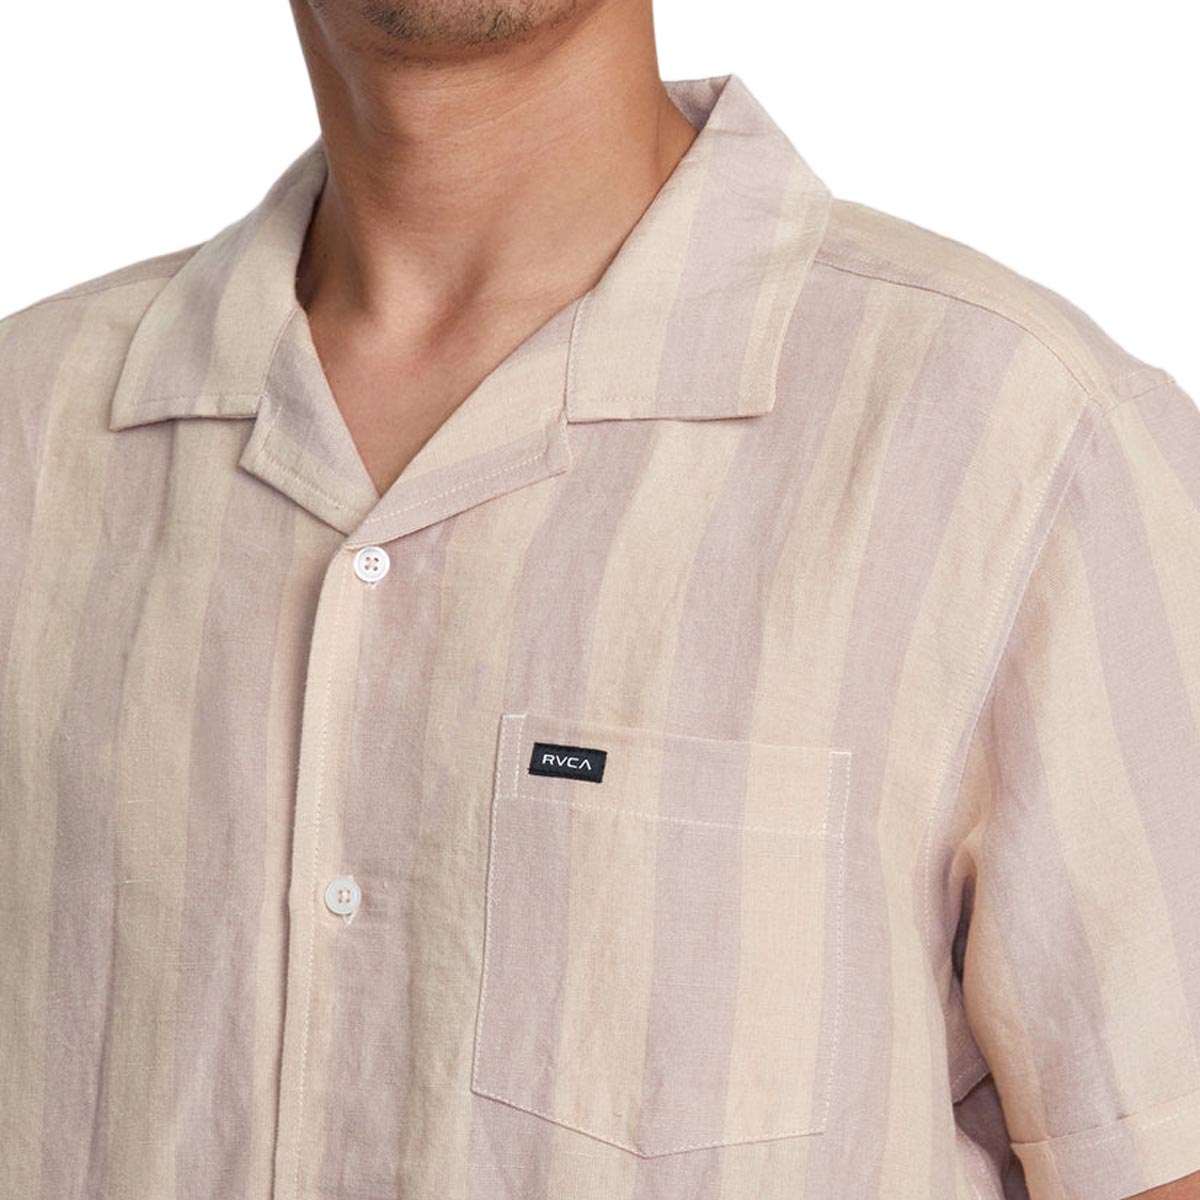 RVCA Love Stripe Shirt - Pale Mauve image 4